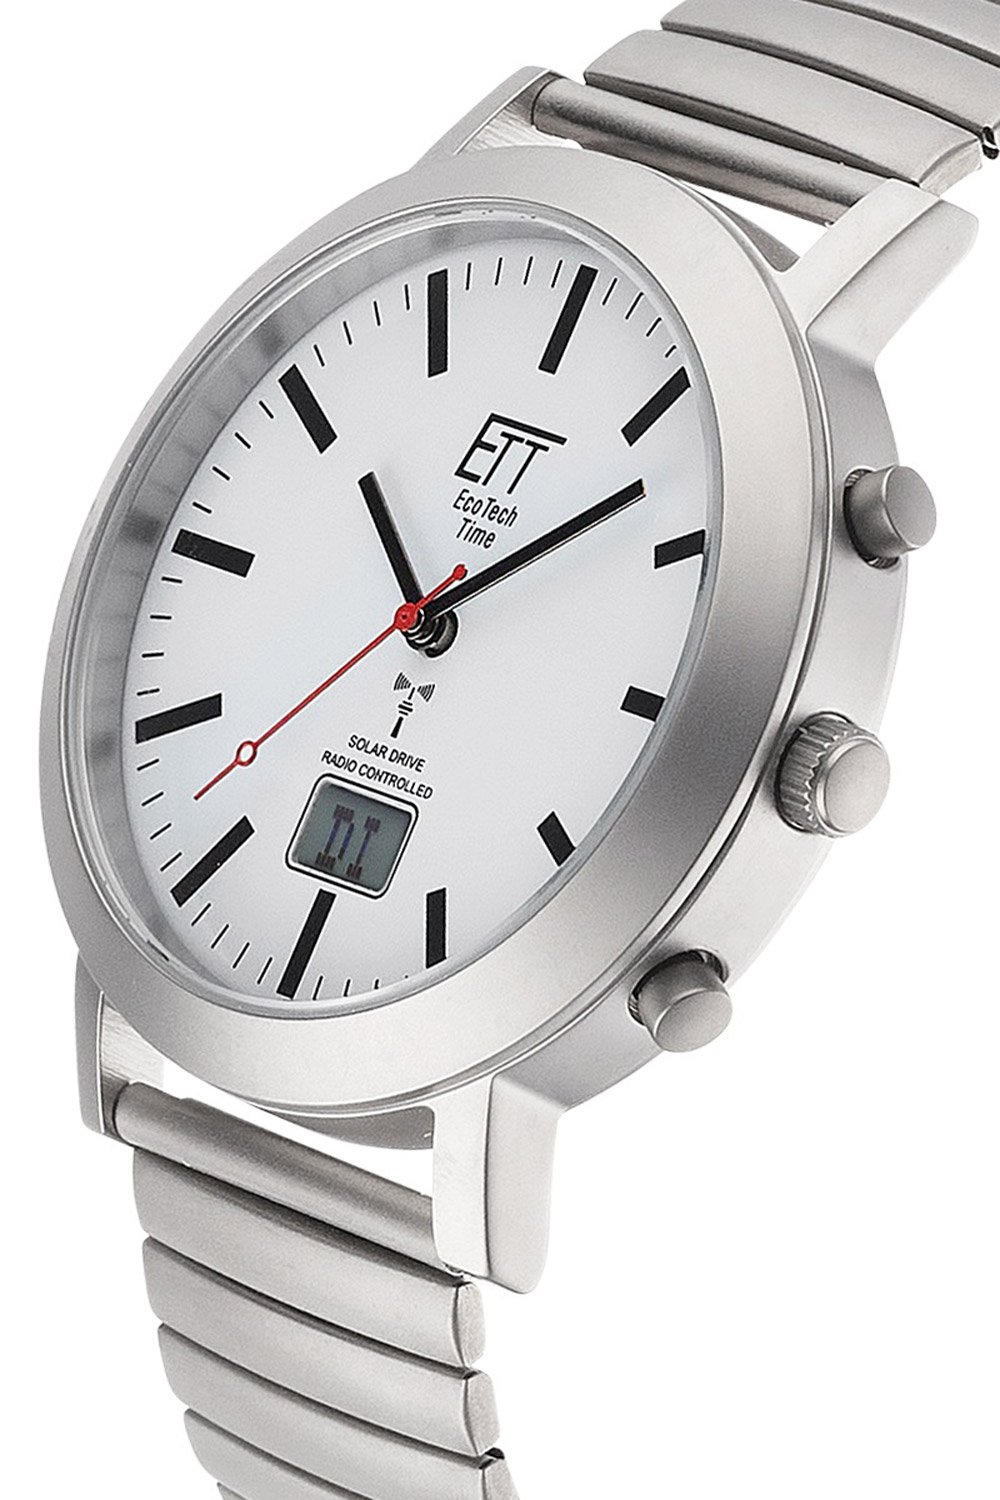 ETT Eco Tech Time Funk-Solar Herren-Armbanduhr Station Watch mit Zugband EGS -11580-11M • uhrcenter